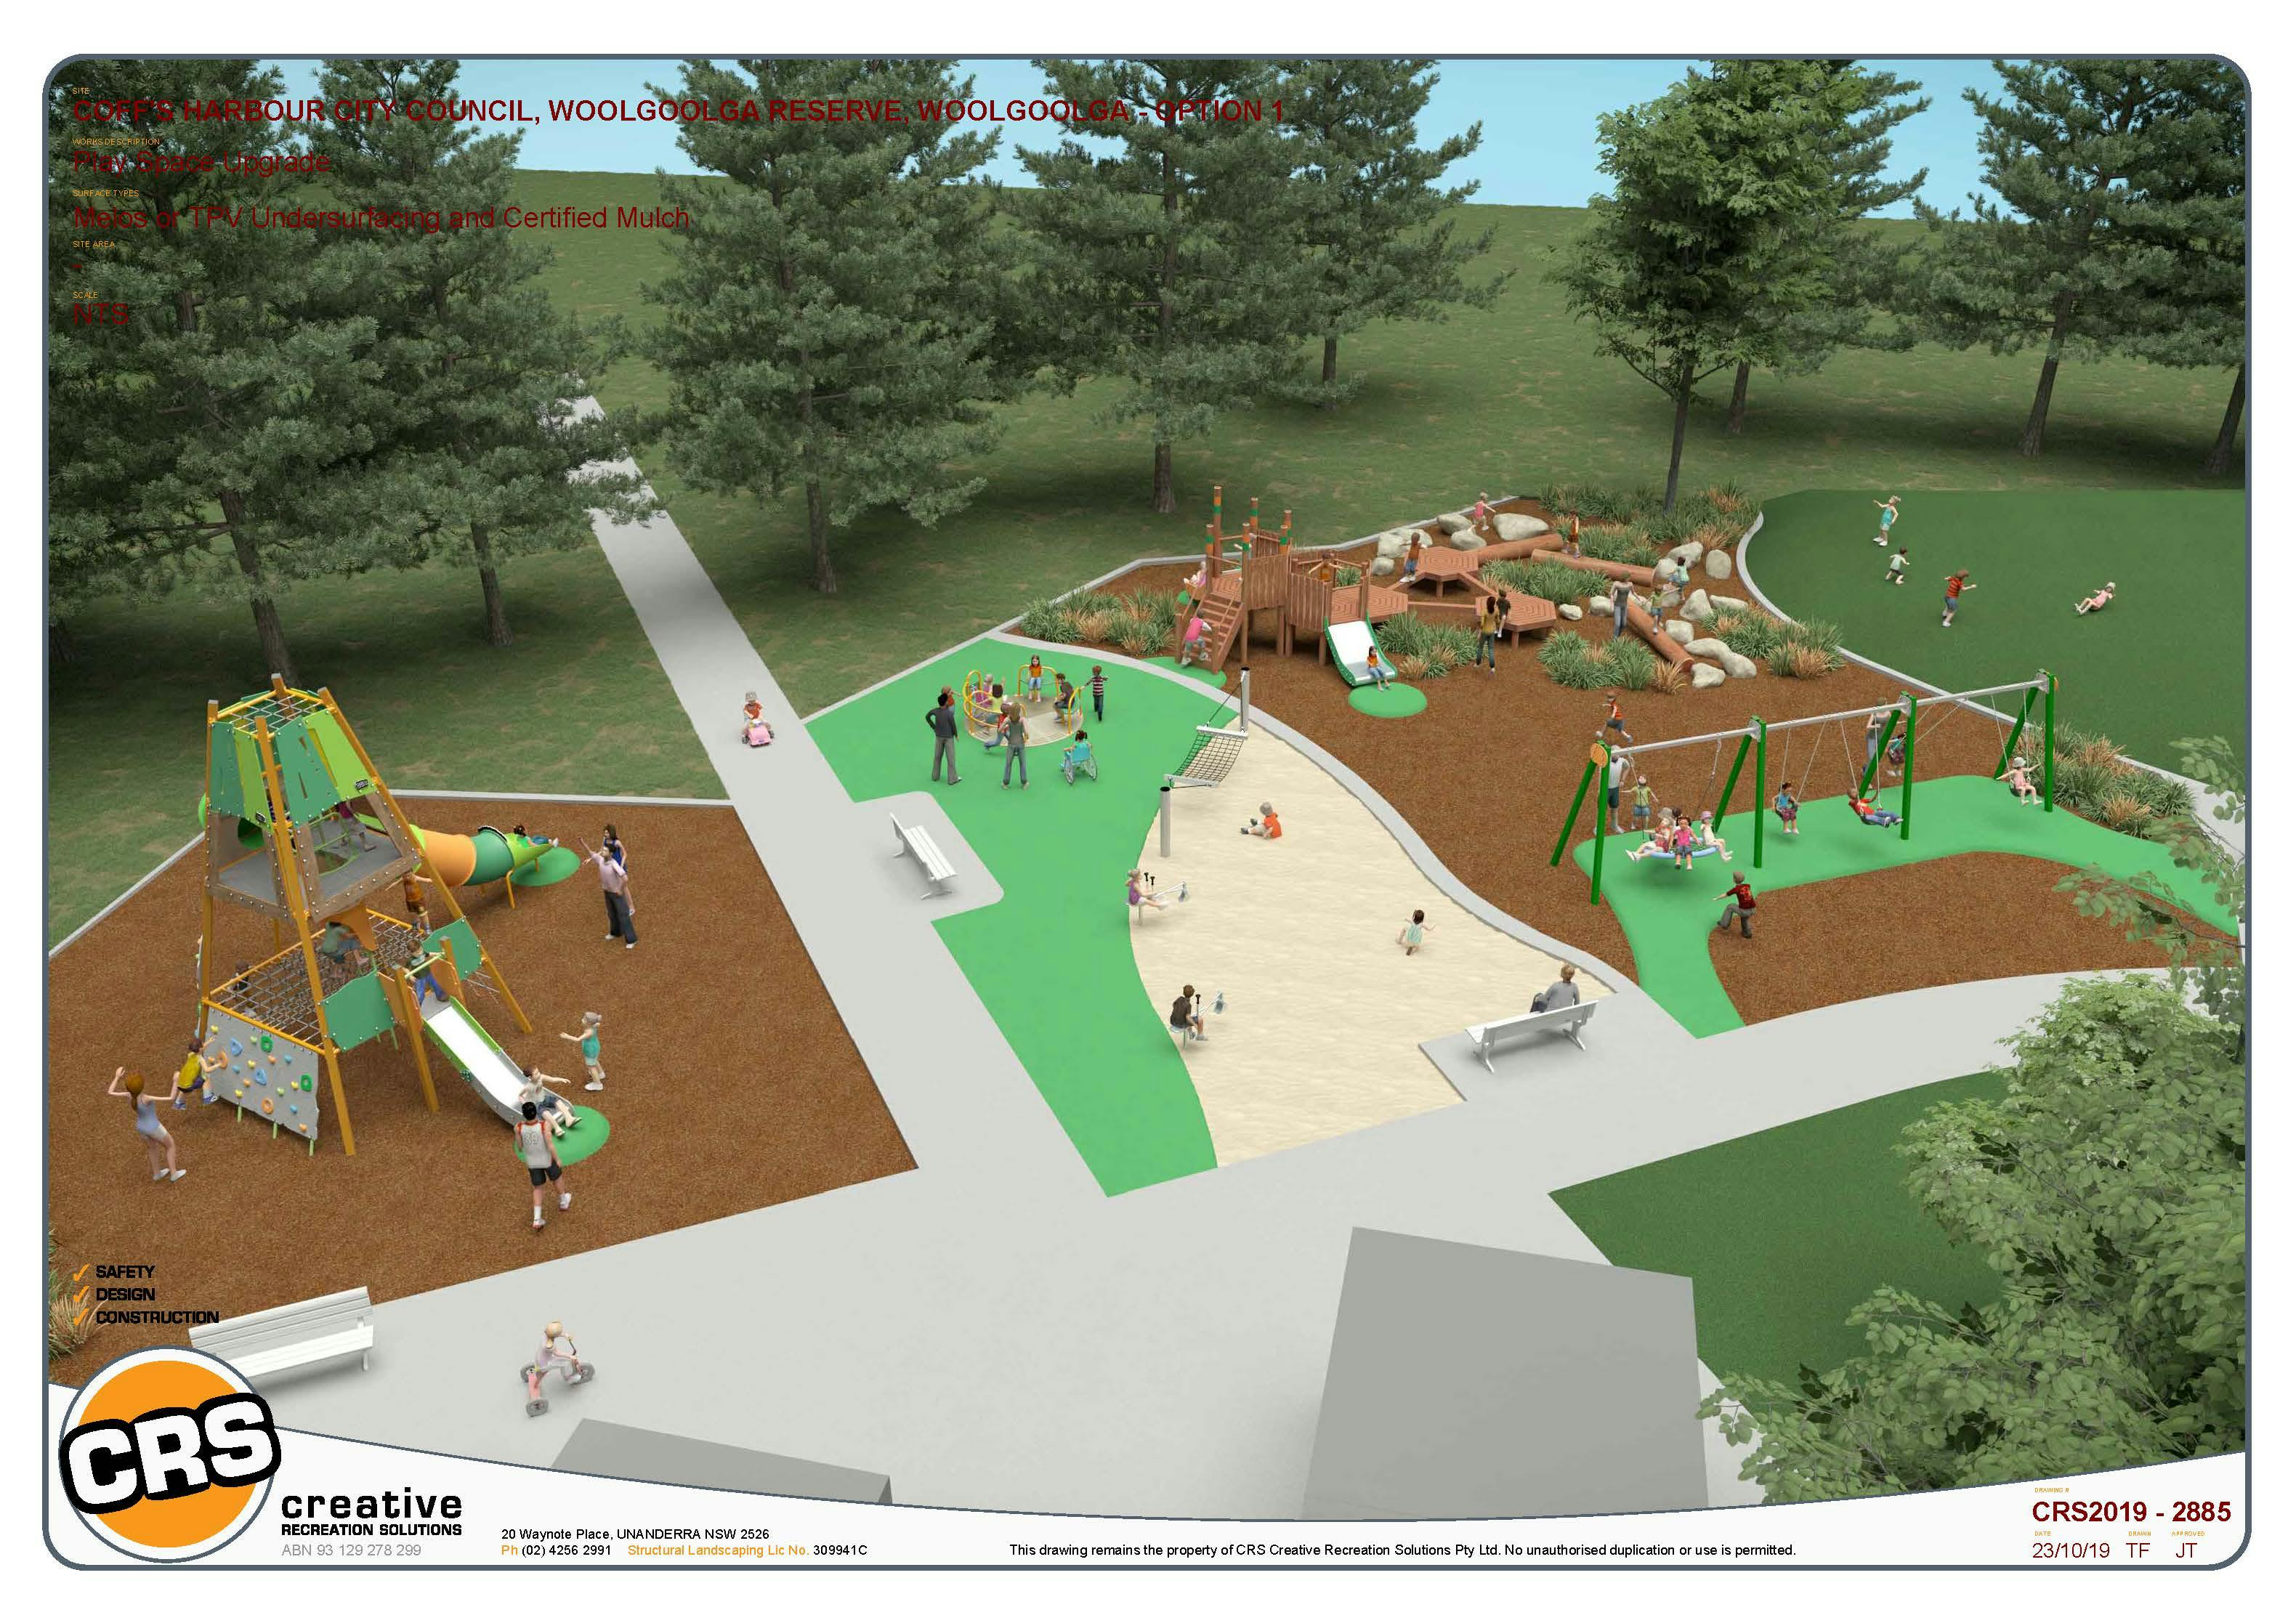 Playground Concepts Woolgoolga Reserve_Page_06.jpg